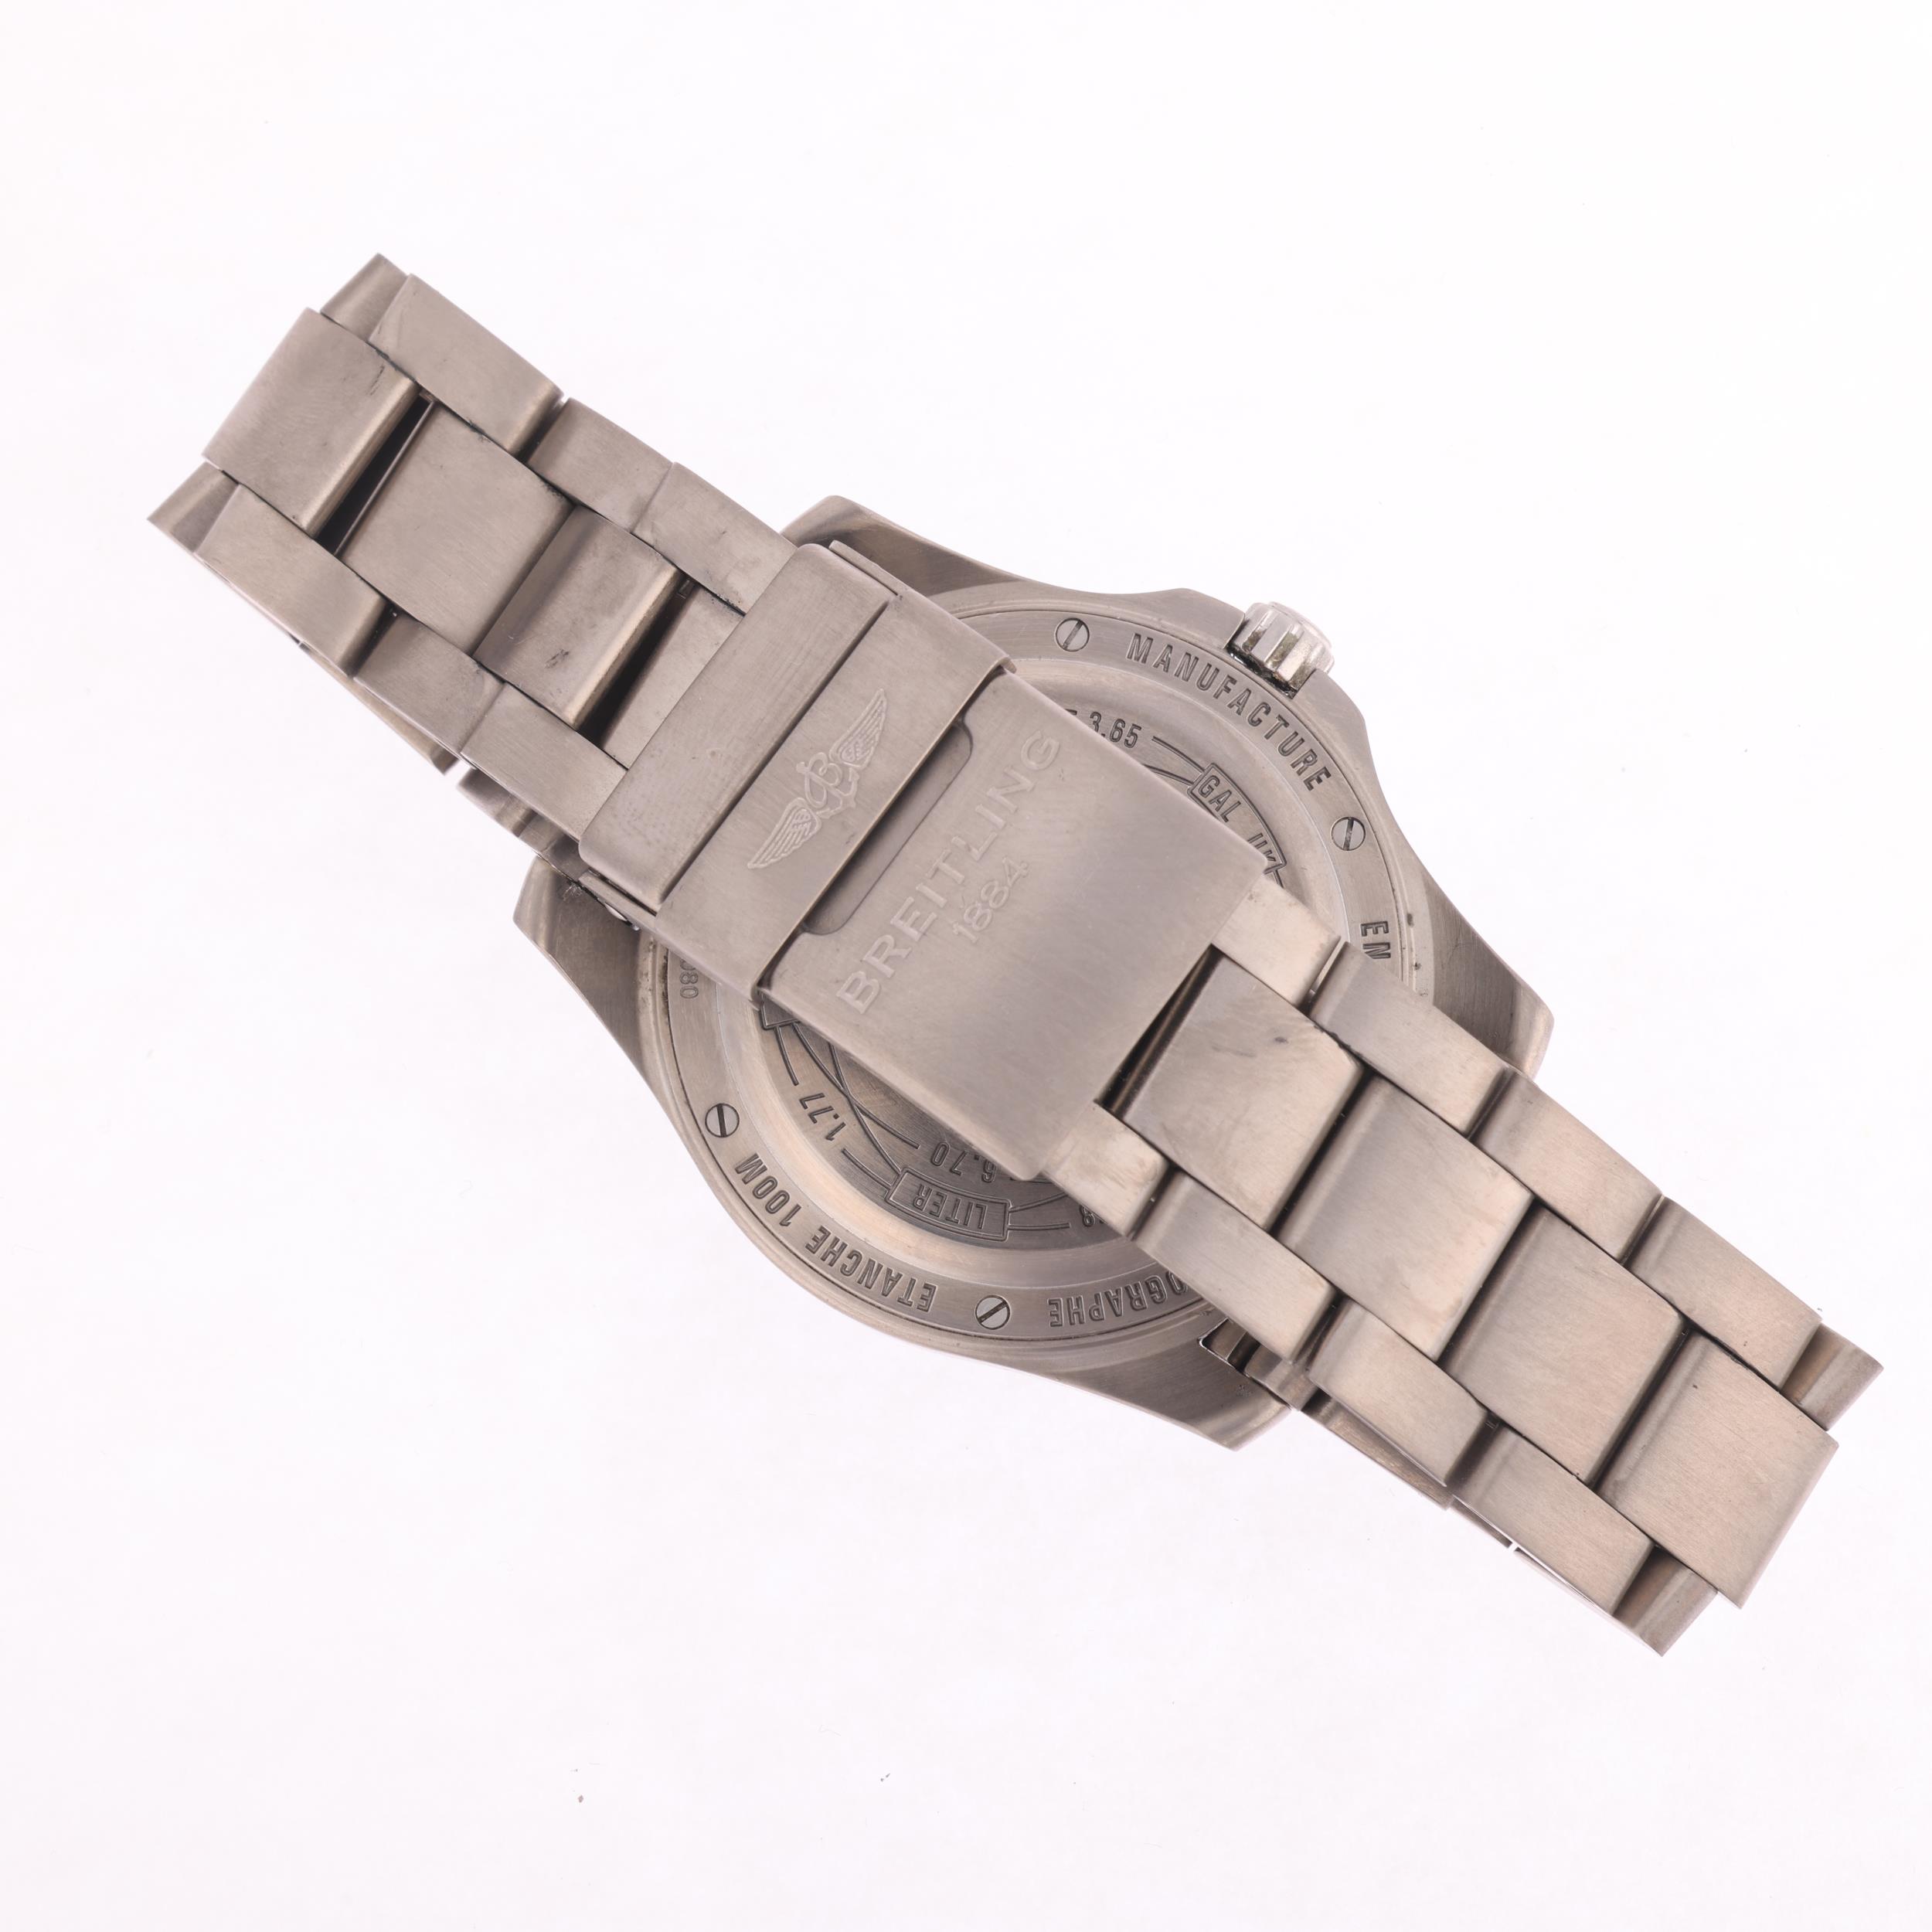 BREITLING - a titanium Aerospace EVO electronic digital wristwatch, ref. E79363, blue dial with - Image 3 of 5